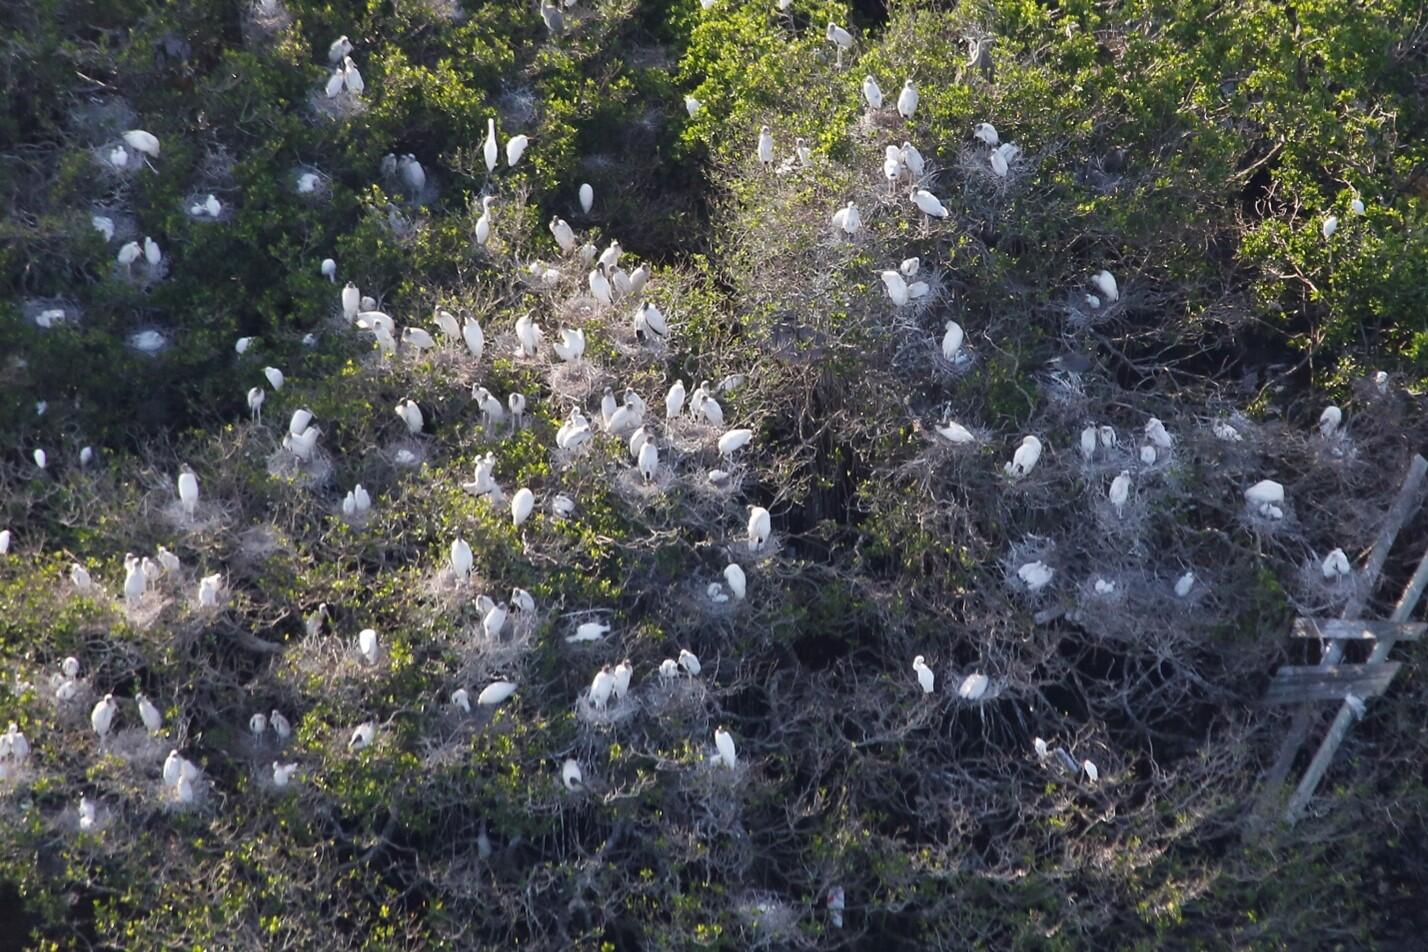 White birds in treetops.